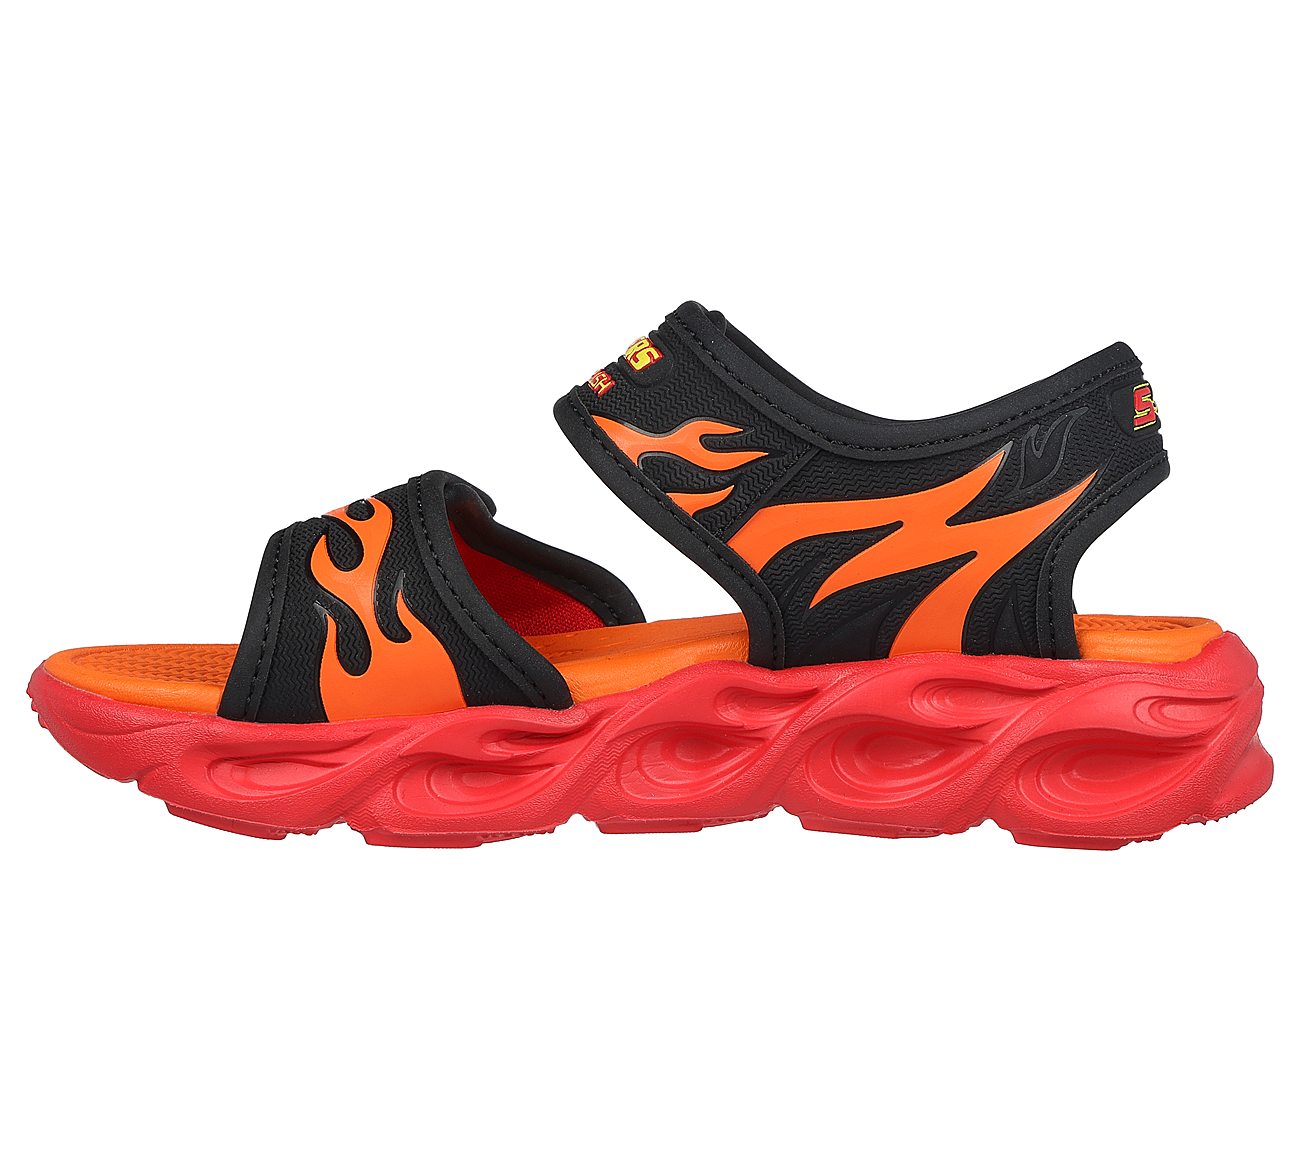 THERMO-SPLASH - HEAT TIDE, BLACK/RED Footwear Left View